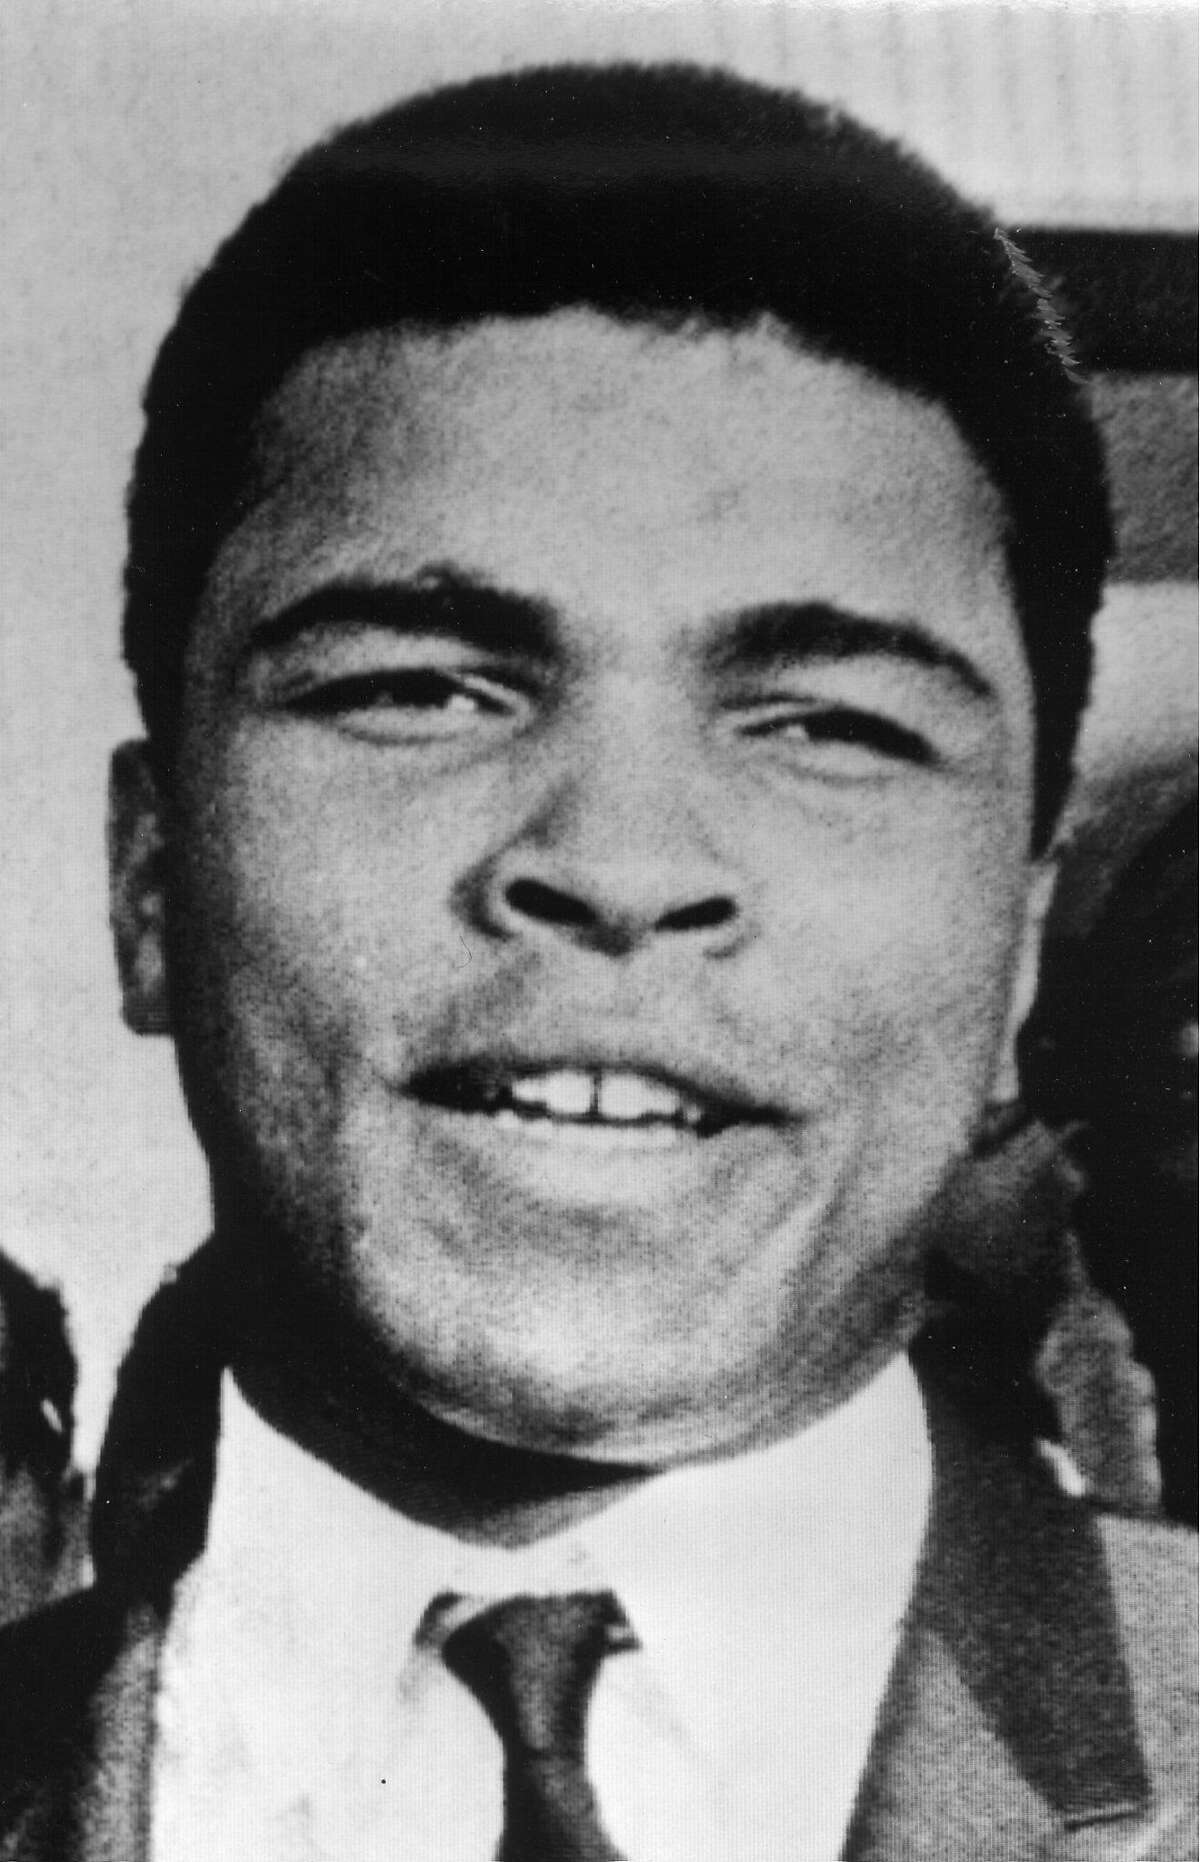 b/w photo of Muhammad Ali 1967